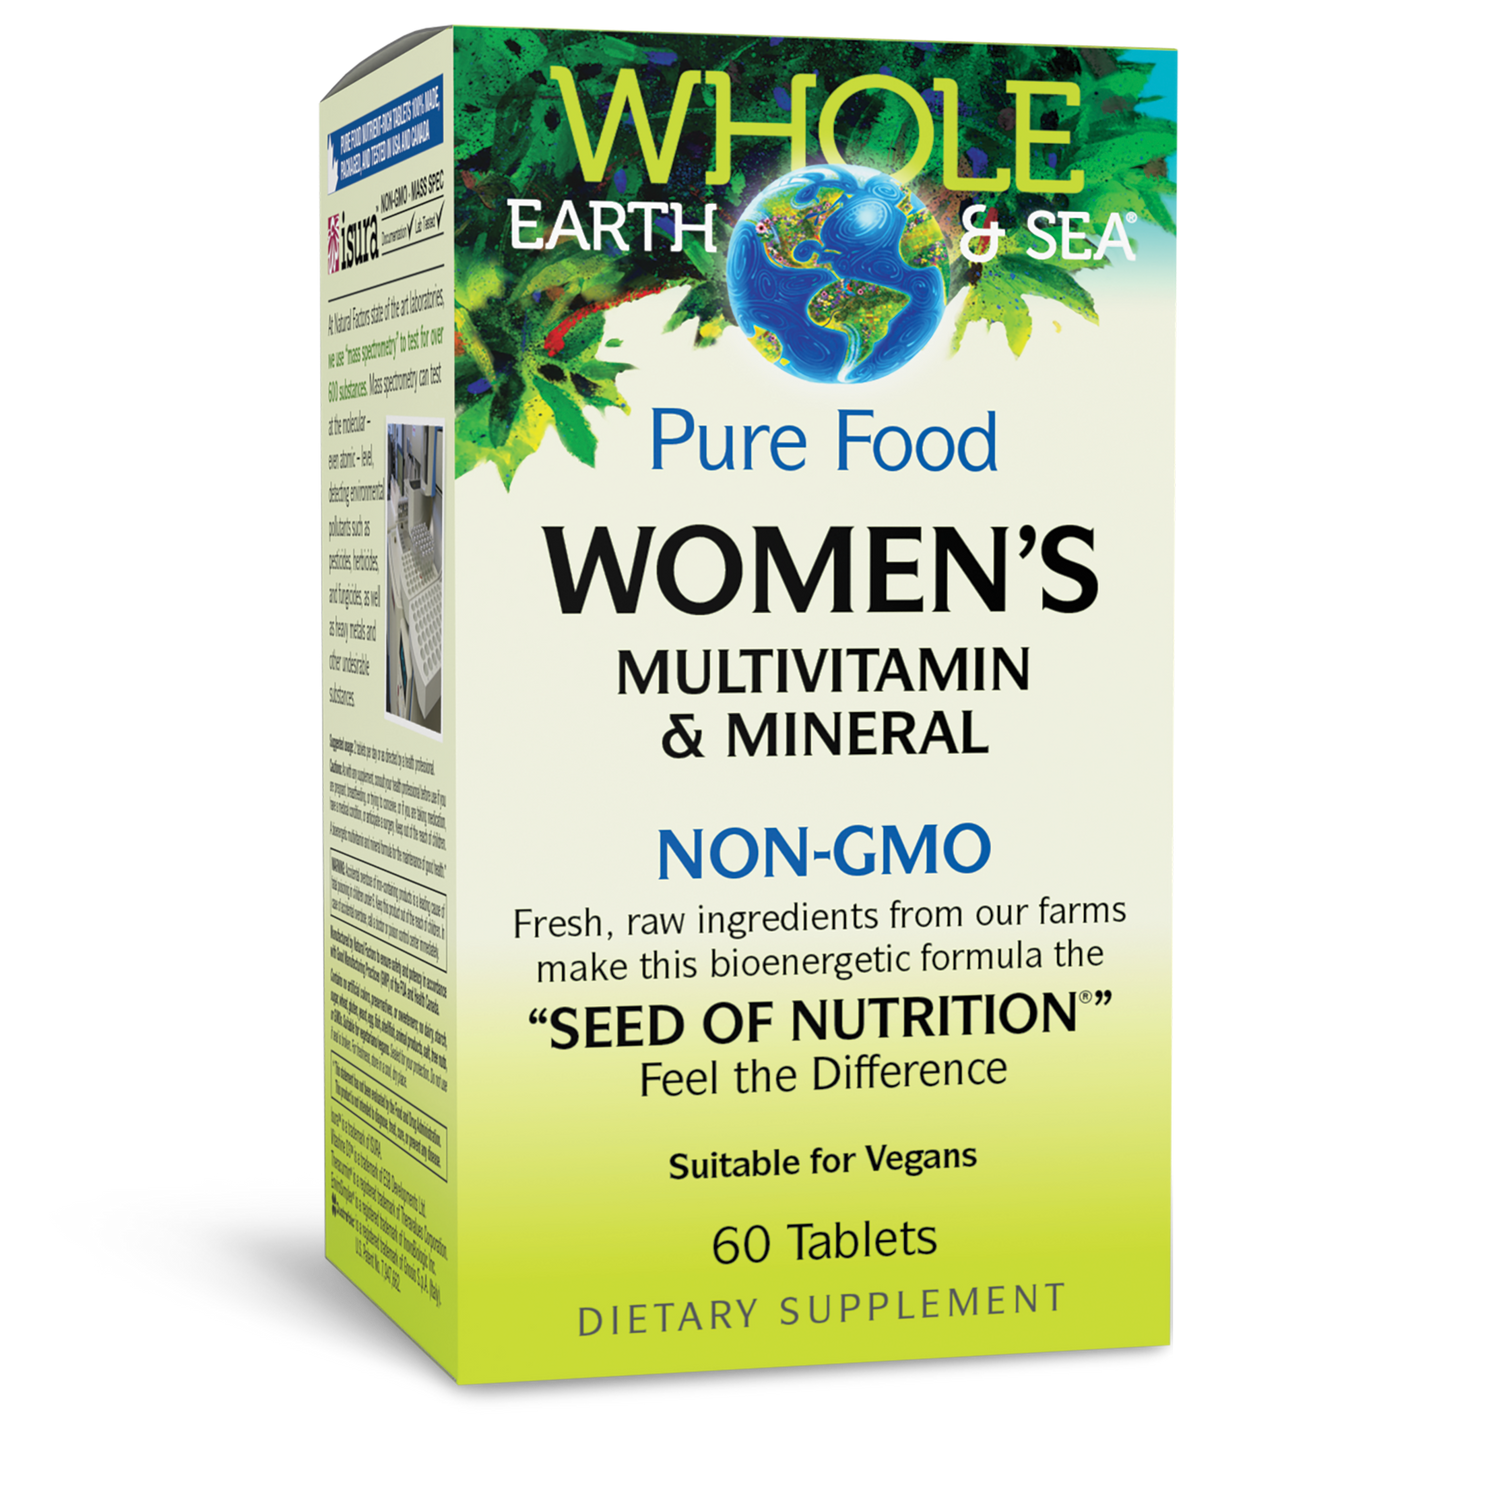 Women's Multivitamin & Mineral|variant|hi-res|35502U